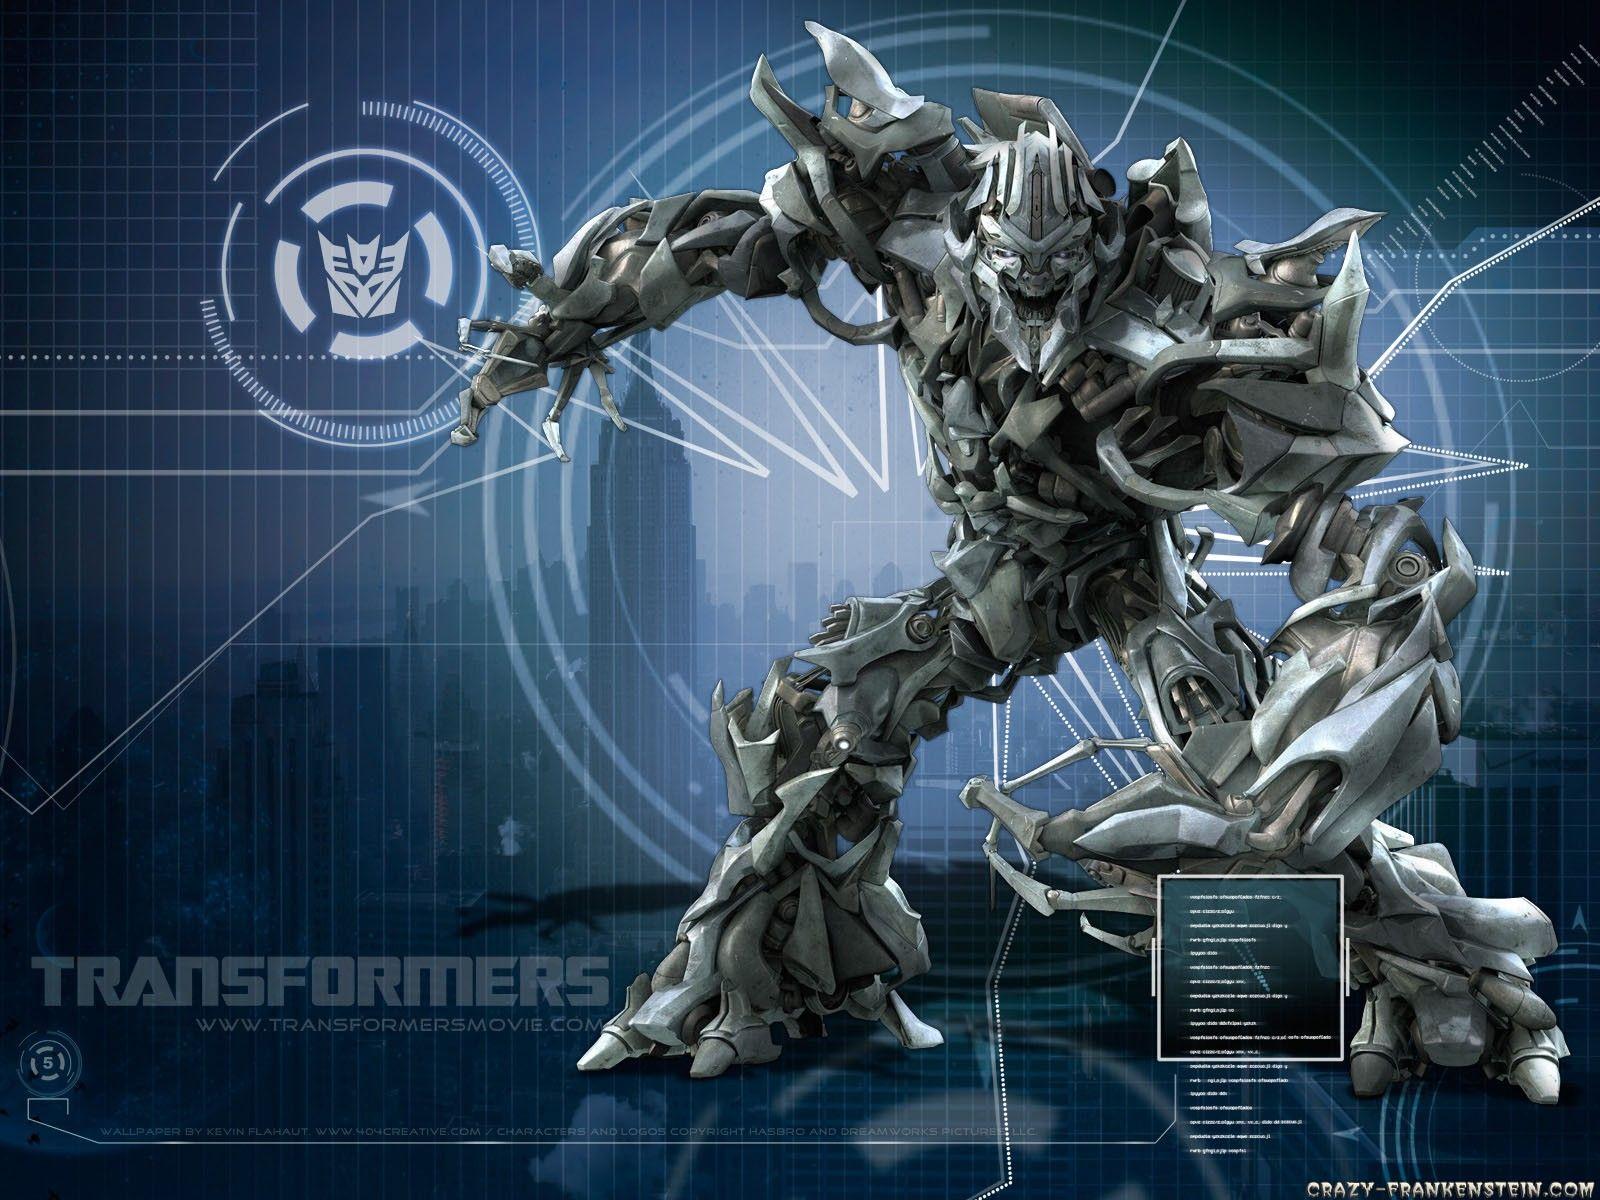 Cool Transformers Wallpaper. Transformers Wallpaper Megatron. Transformers movie, Transformers, Movie wallpaper